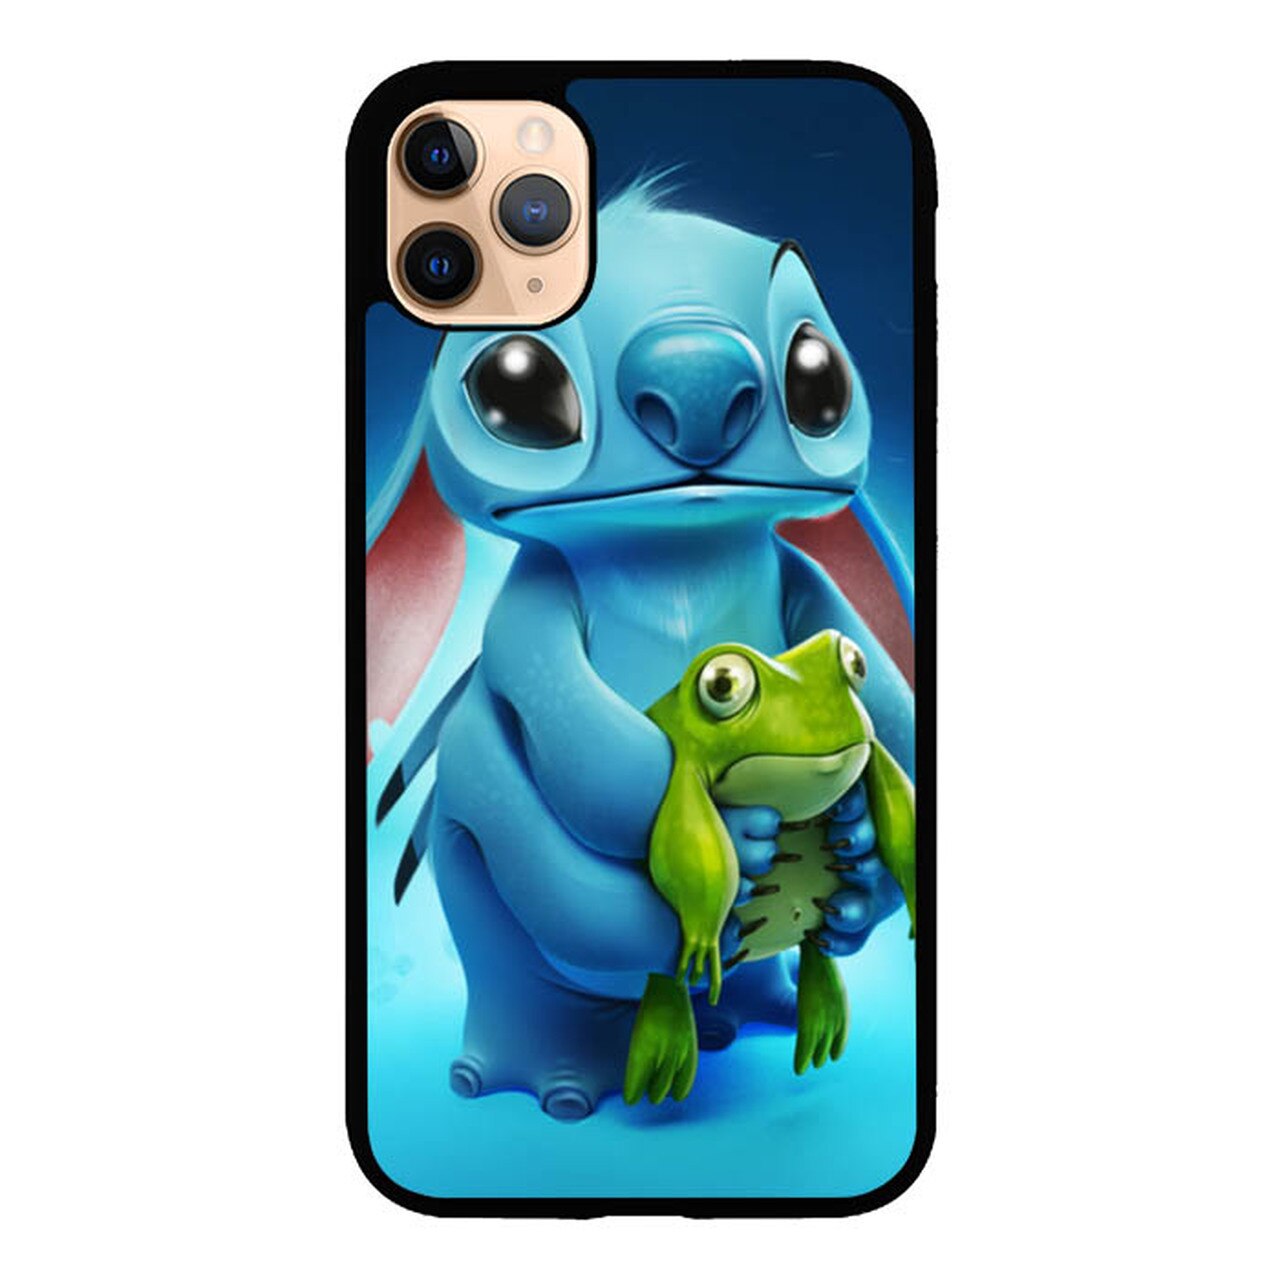 Iphone Pro Max Stitch Case - HD Wallpaper 